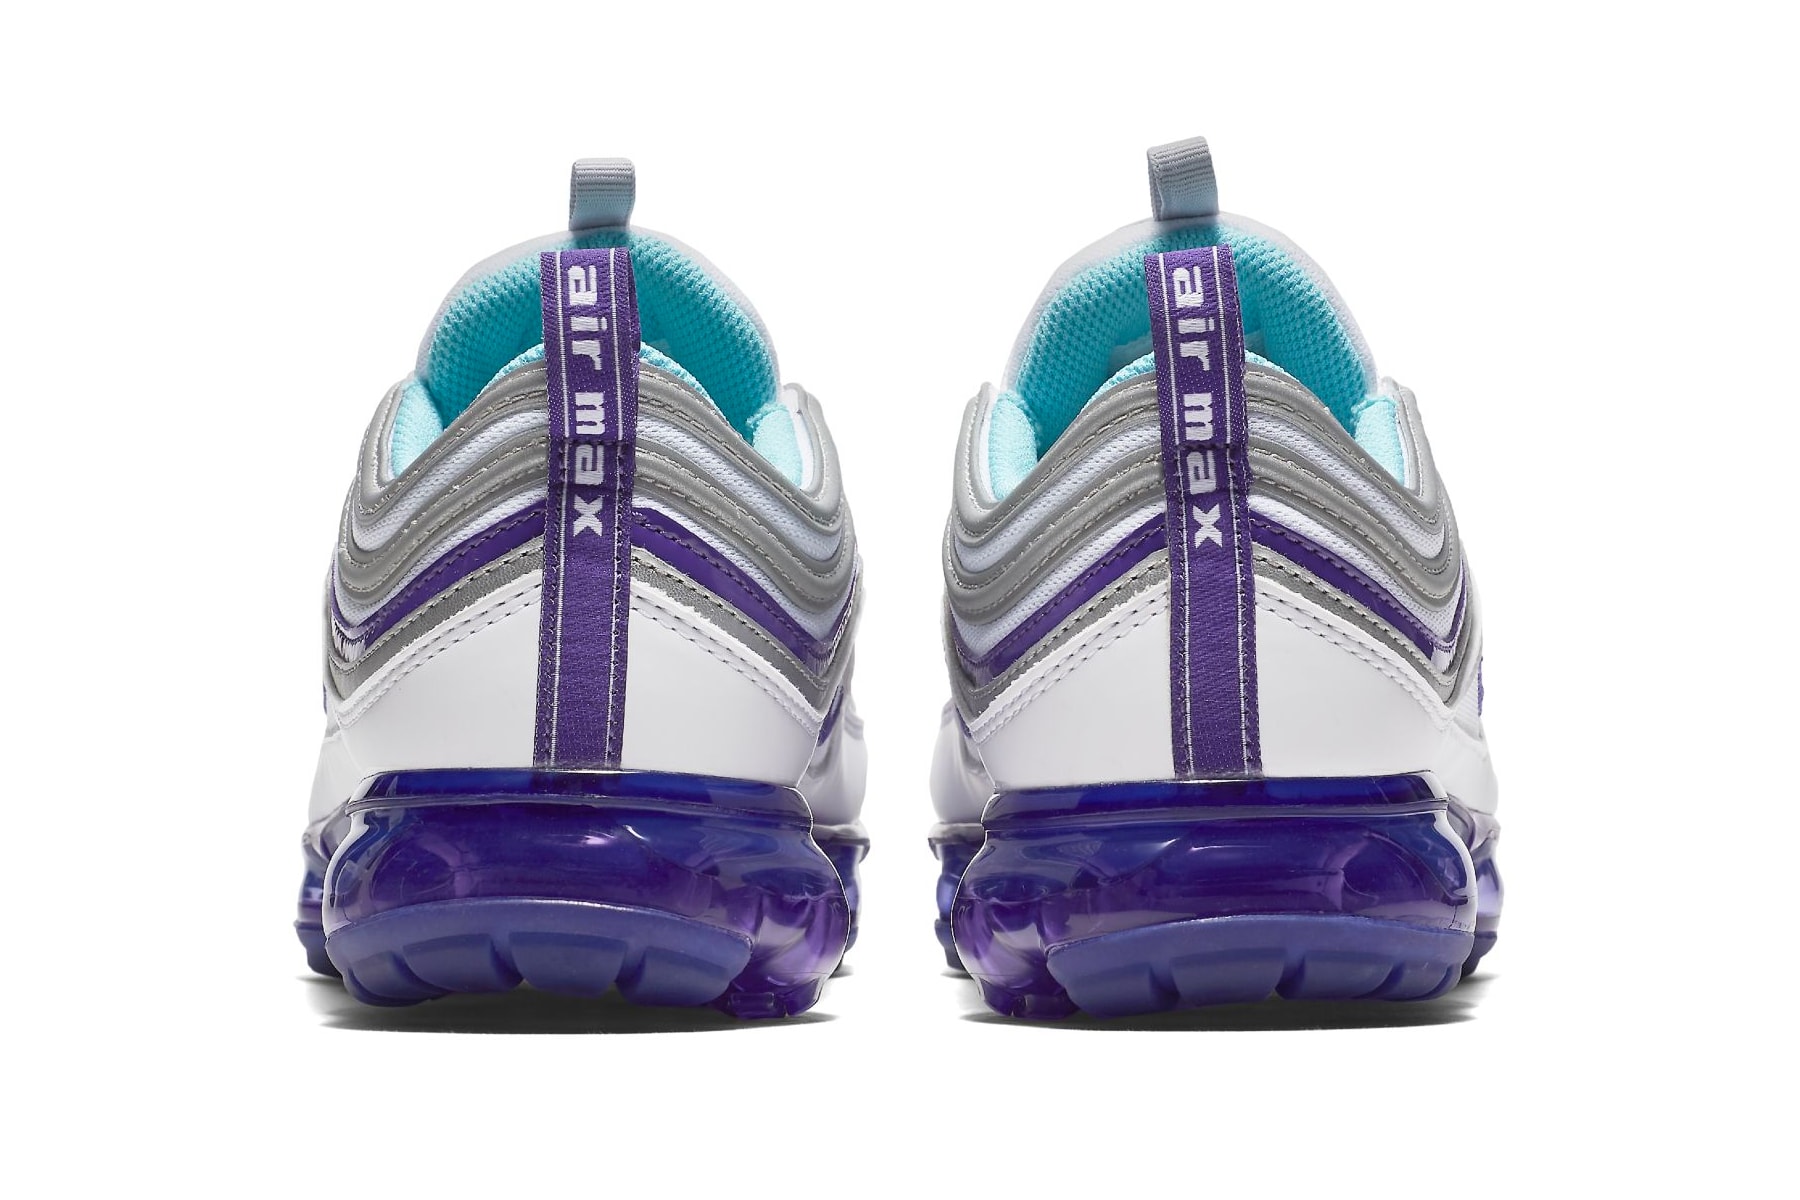 Nike Air Vapormax 97 White Varsity Purple release date sneaker price aqua